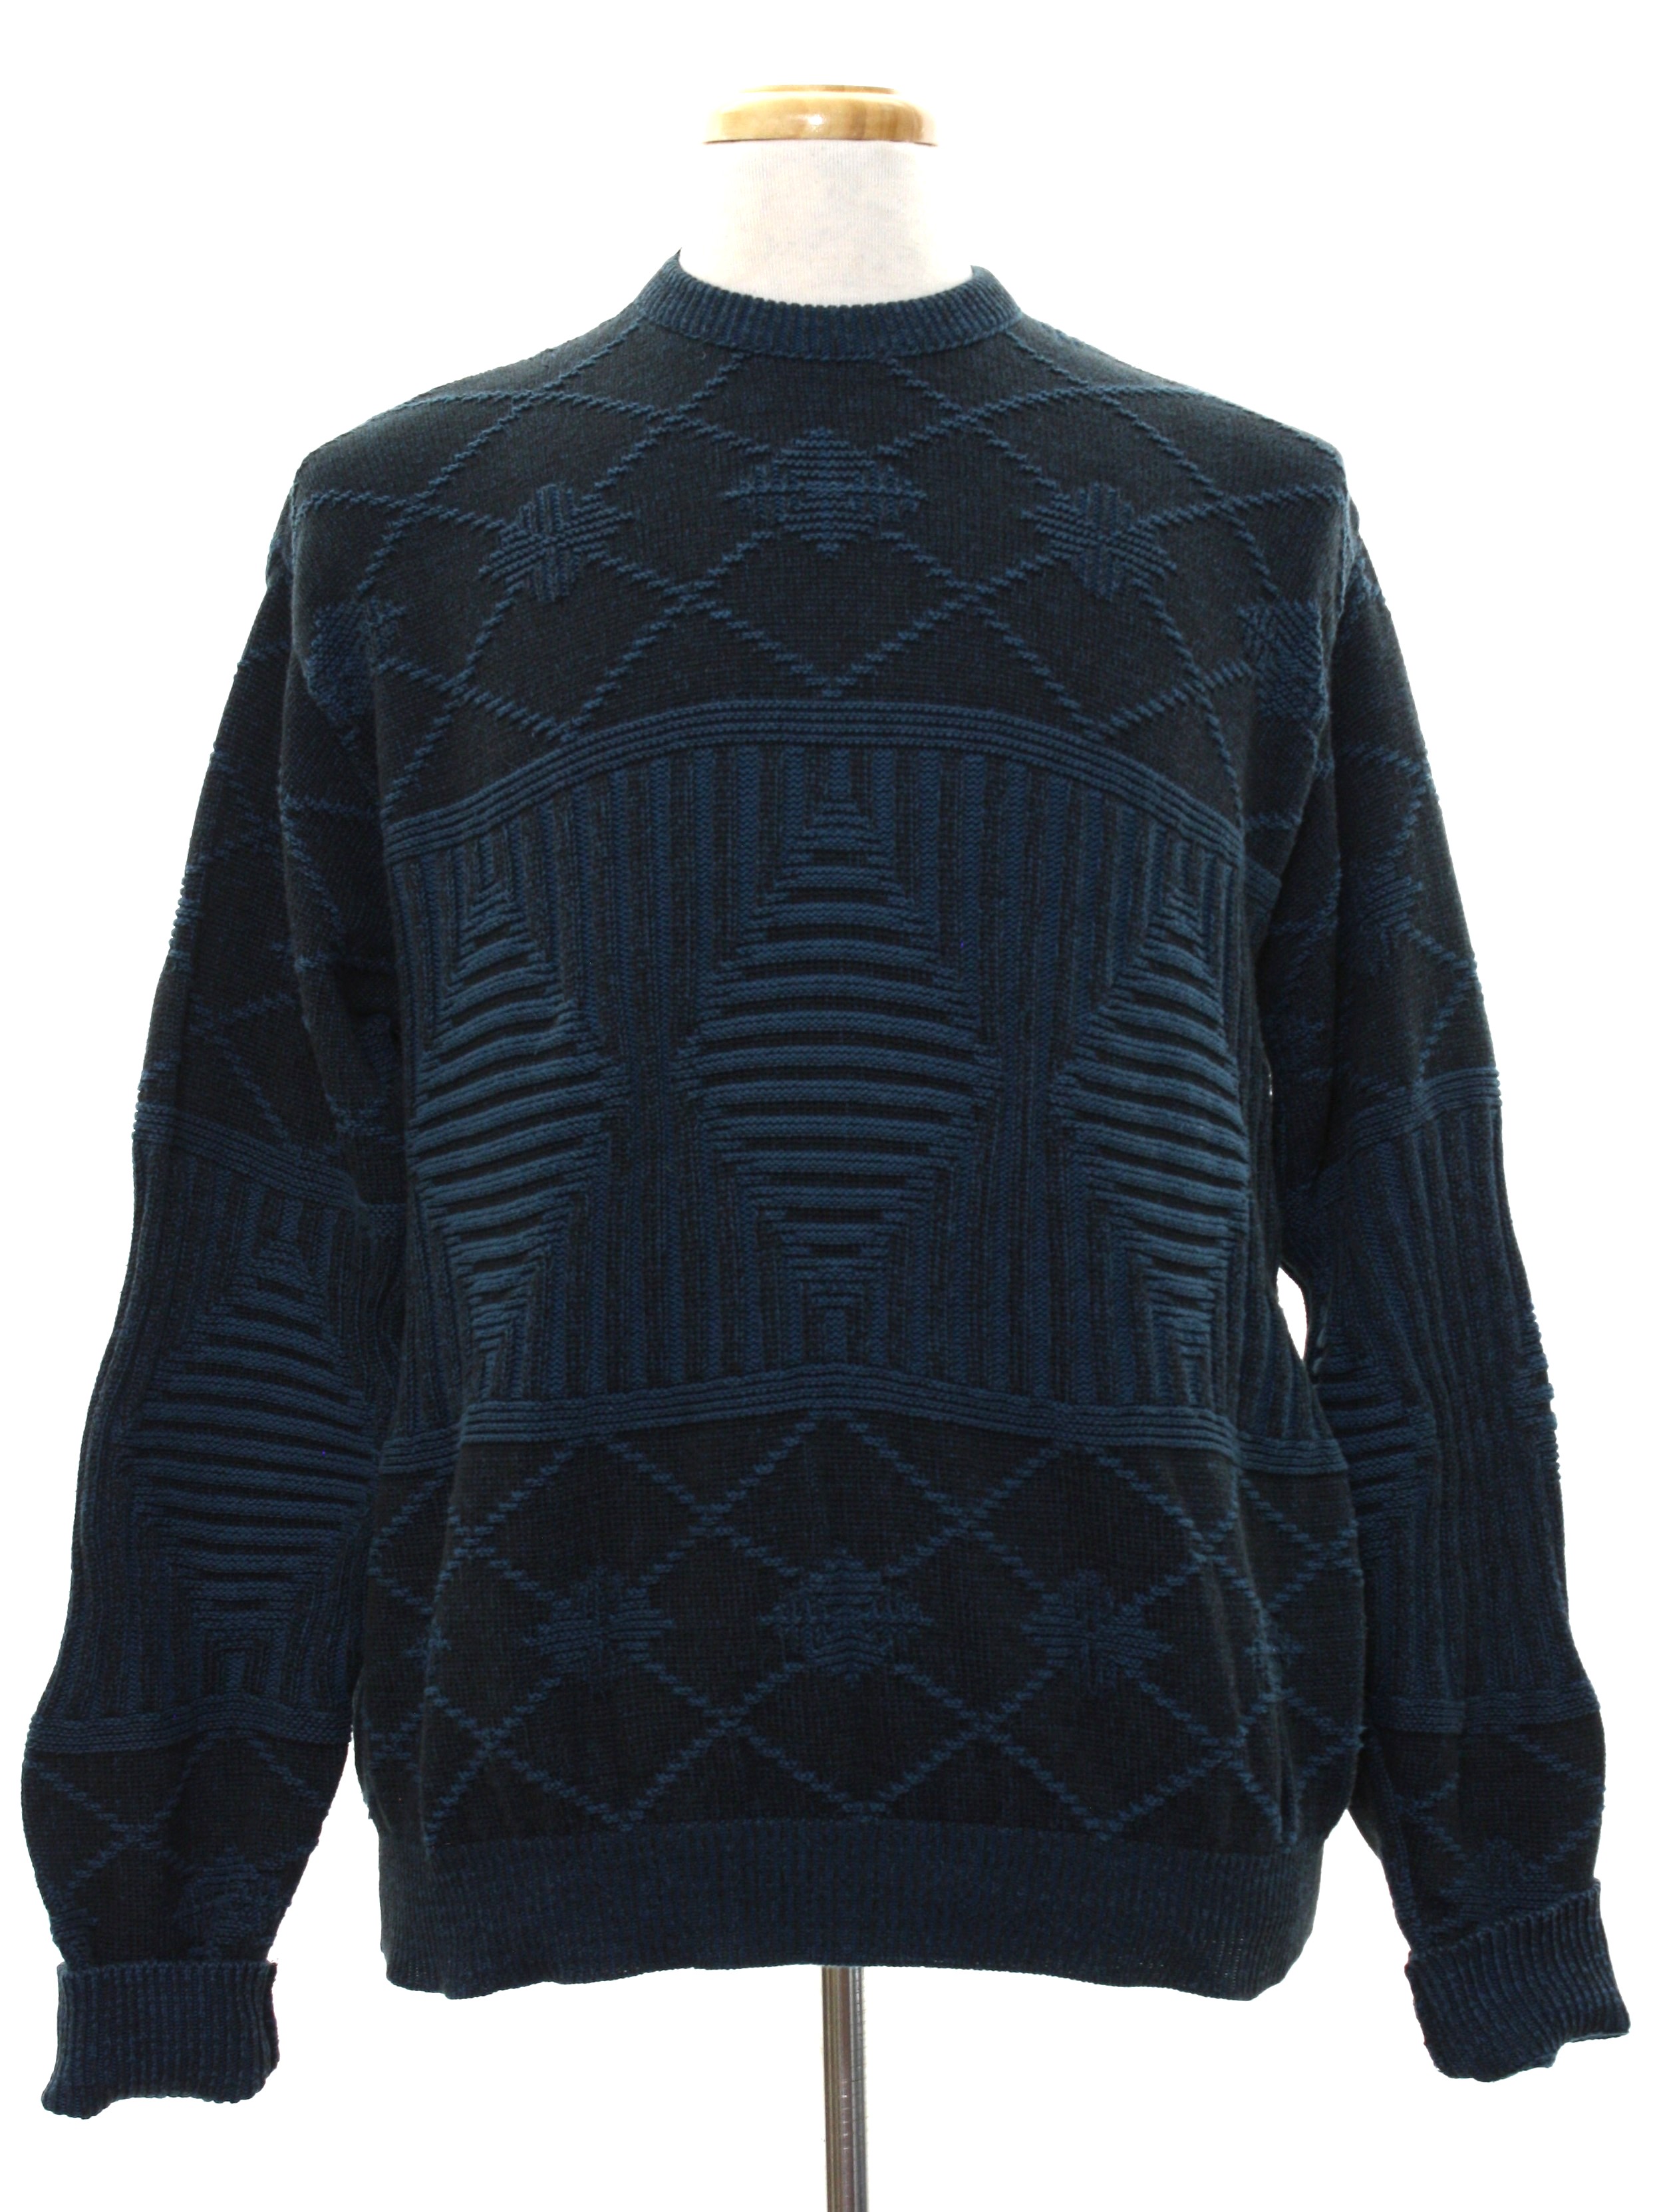 80s Sweater (Jantzen): 80s -Jantzen- Mens Faded black and blue/grey ...